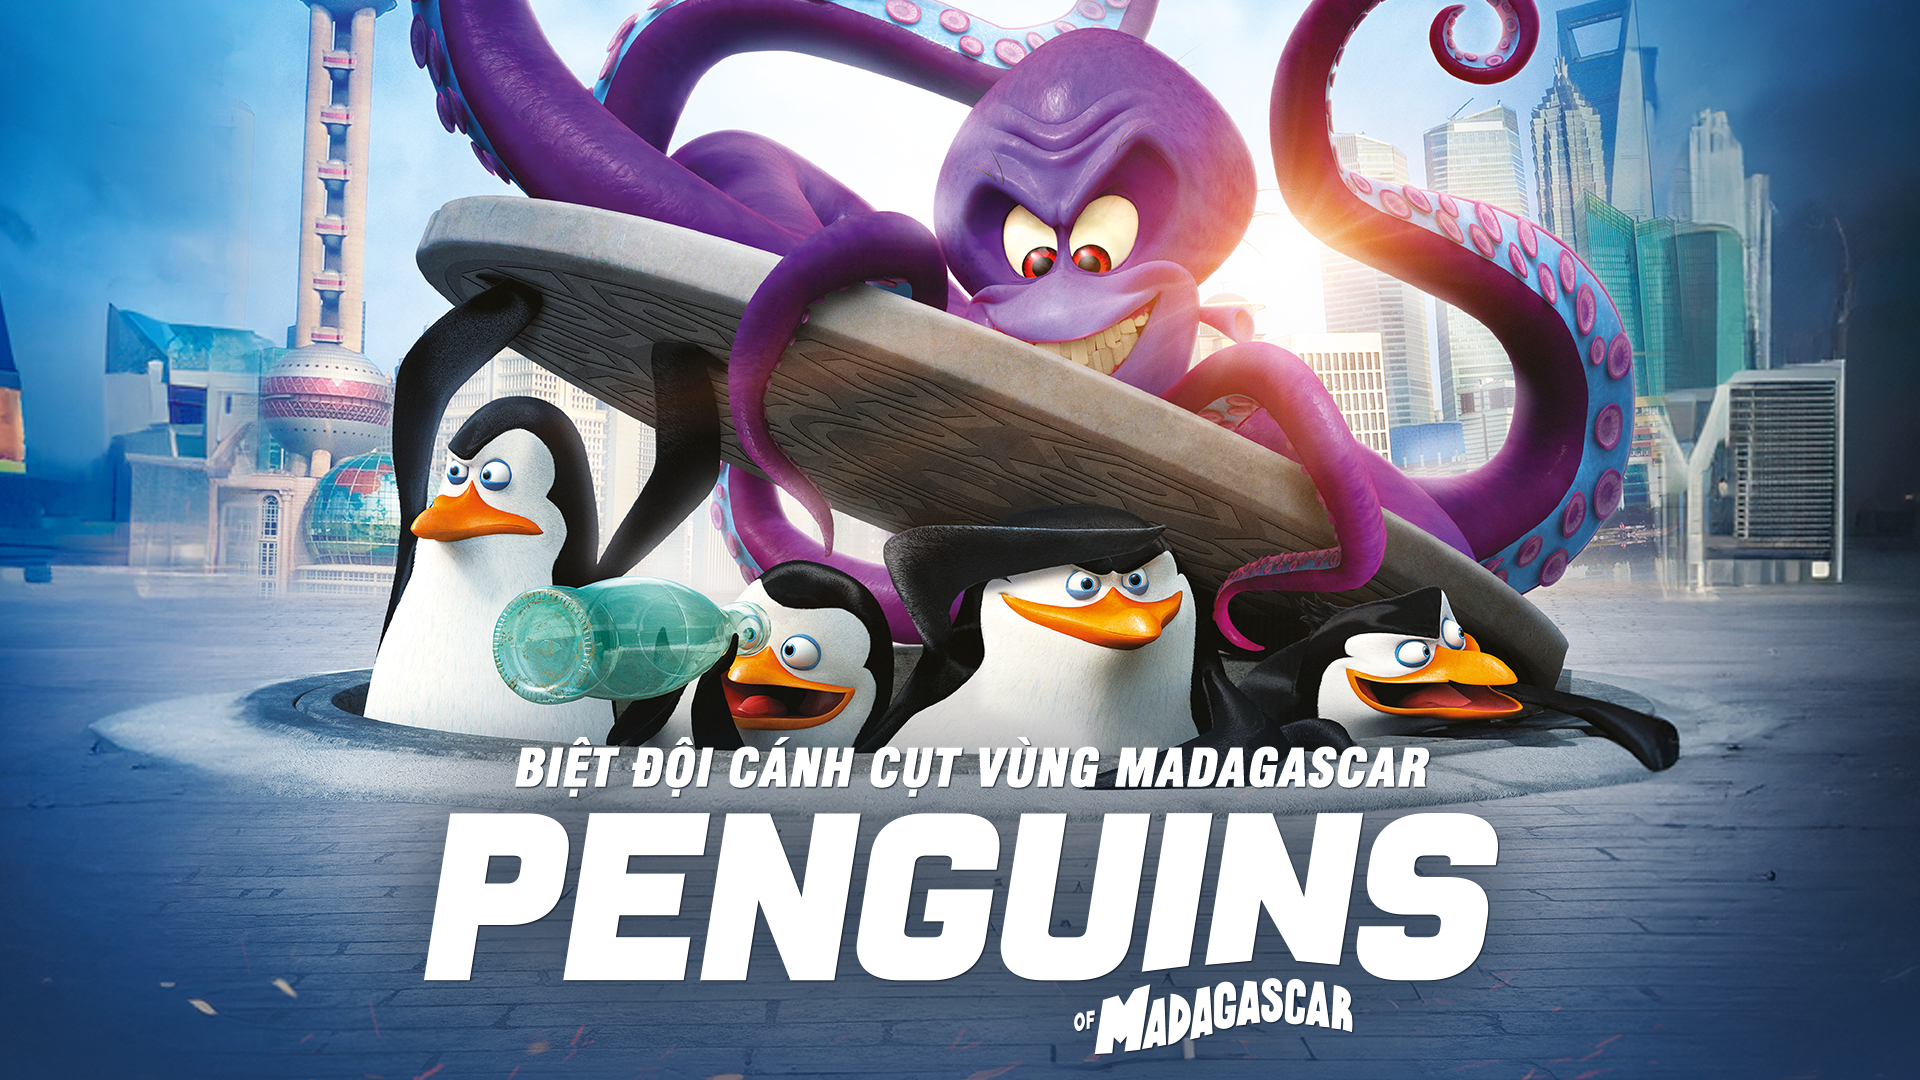 Biệt đội cánh cụt vùng Madagascar Penguins of Madagascar: The Movie